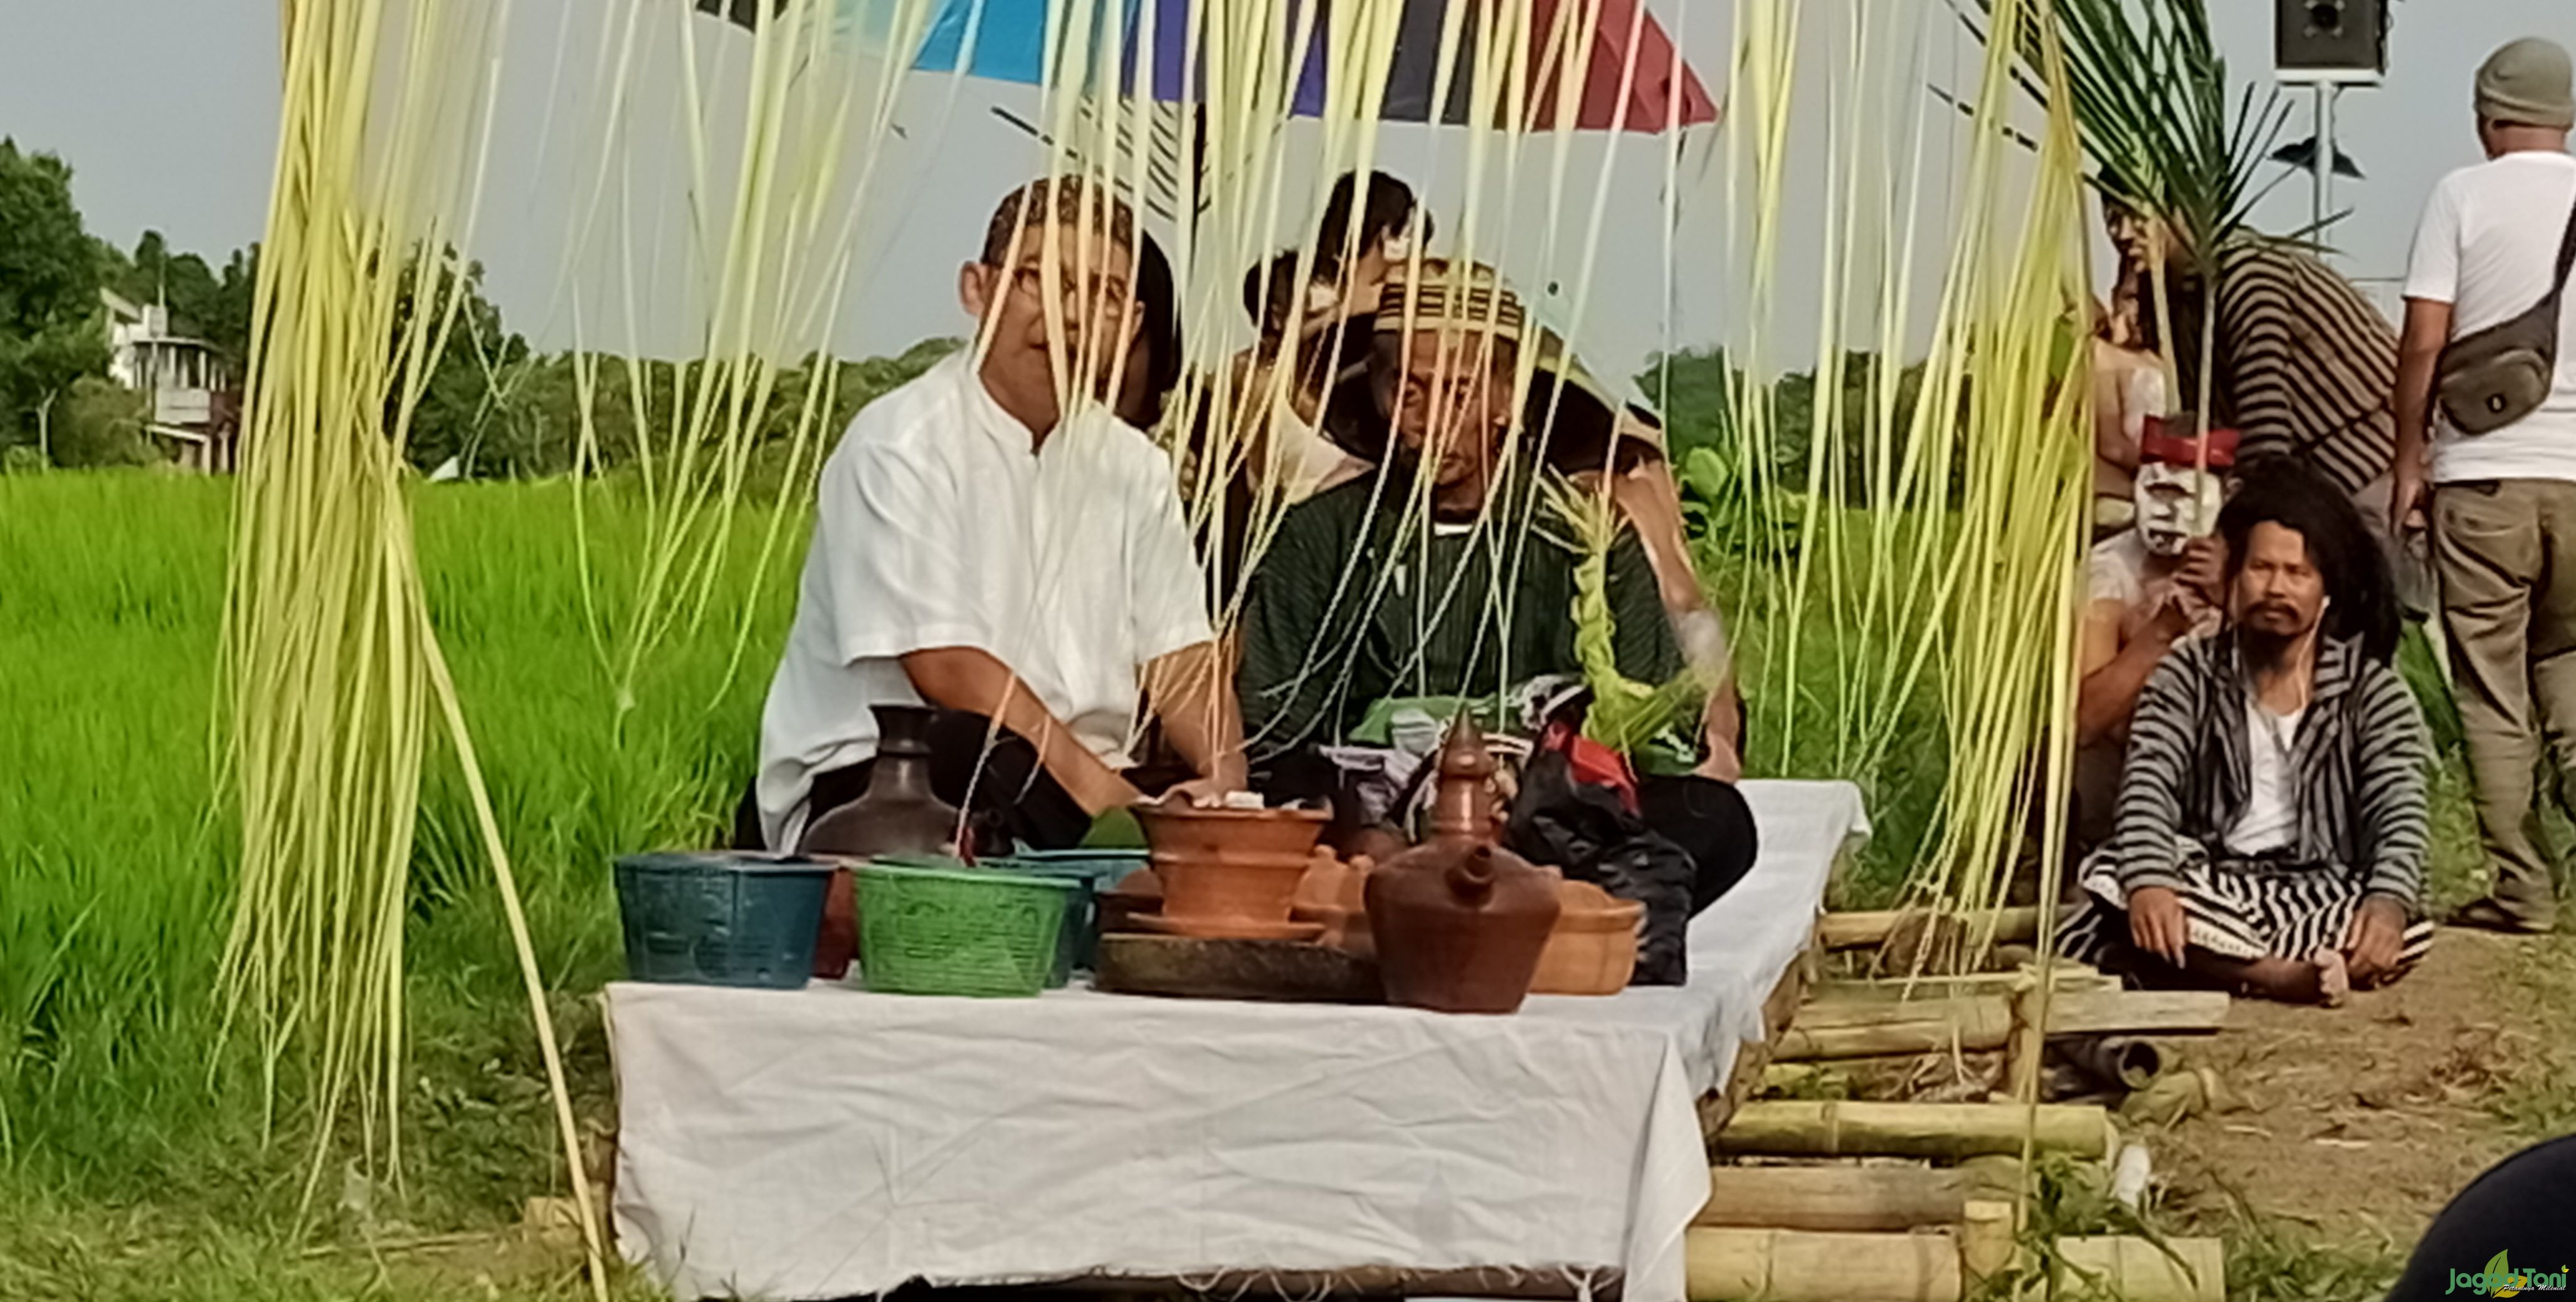 Ritual pengendalian hama pertanian di Desa Delanggu, Klaten, Jawa Tengah